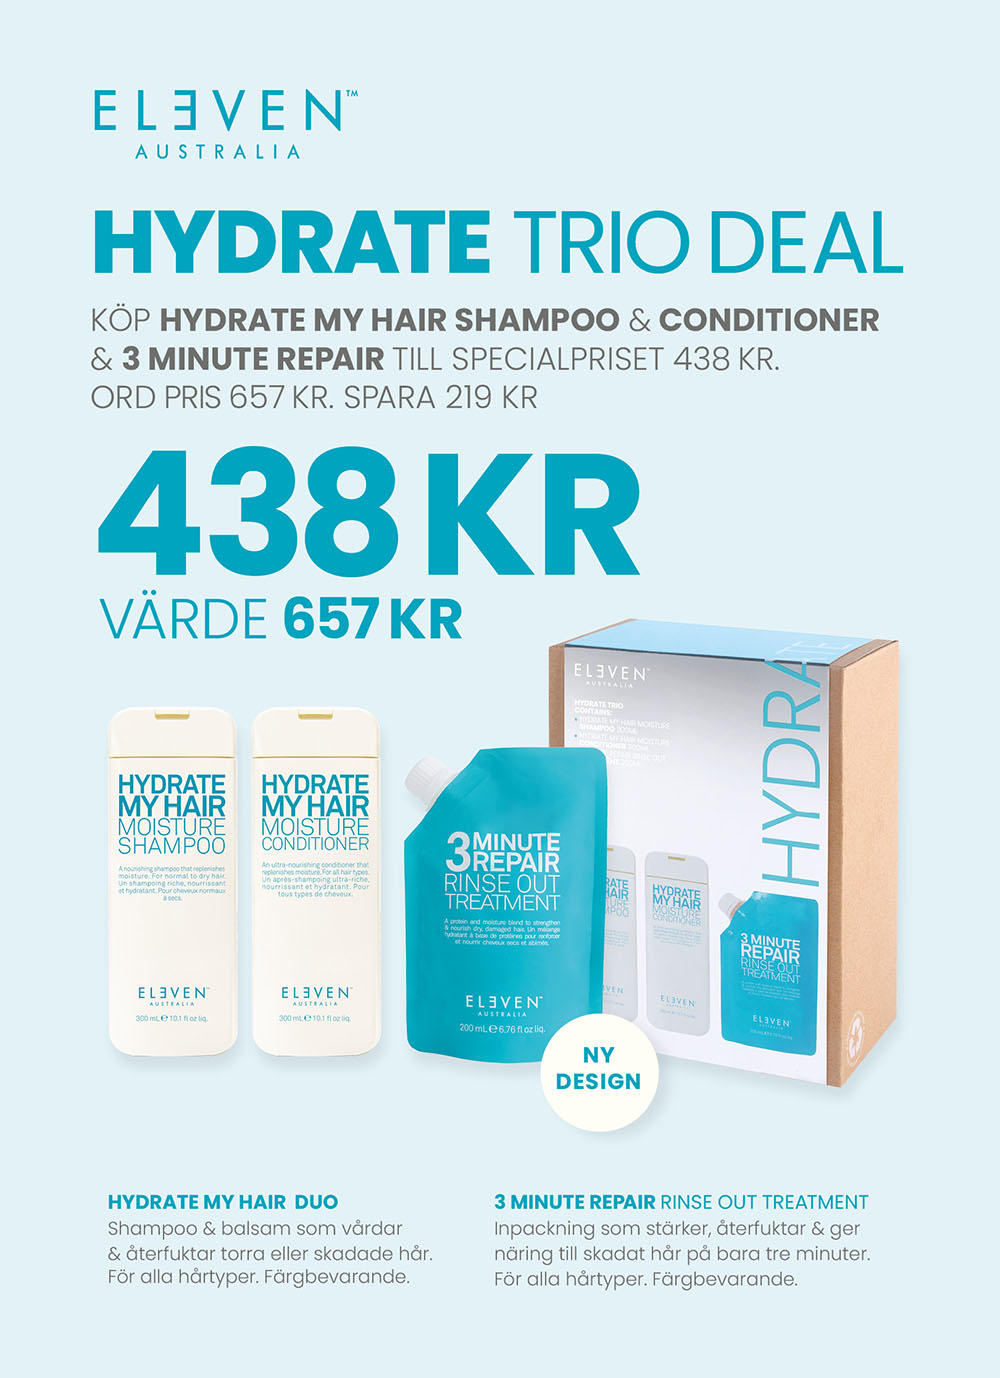 Eleven Australia Hydrate My Hair TRIO BOX - Hairsale.se